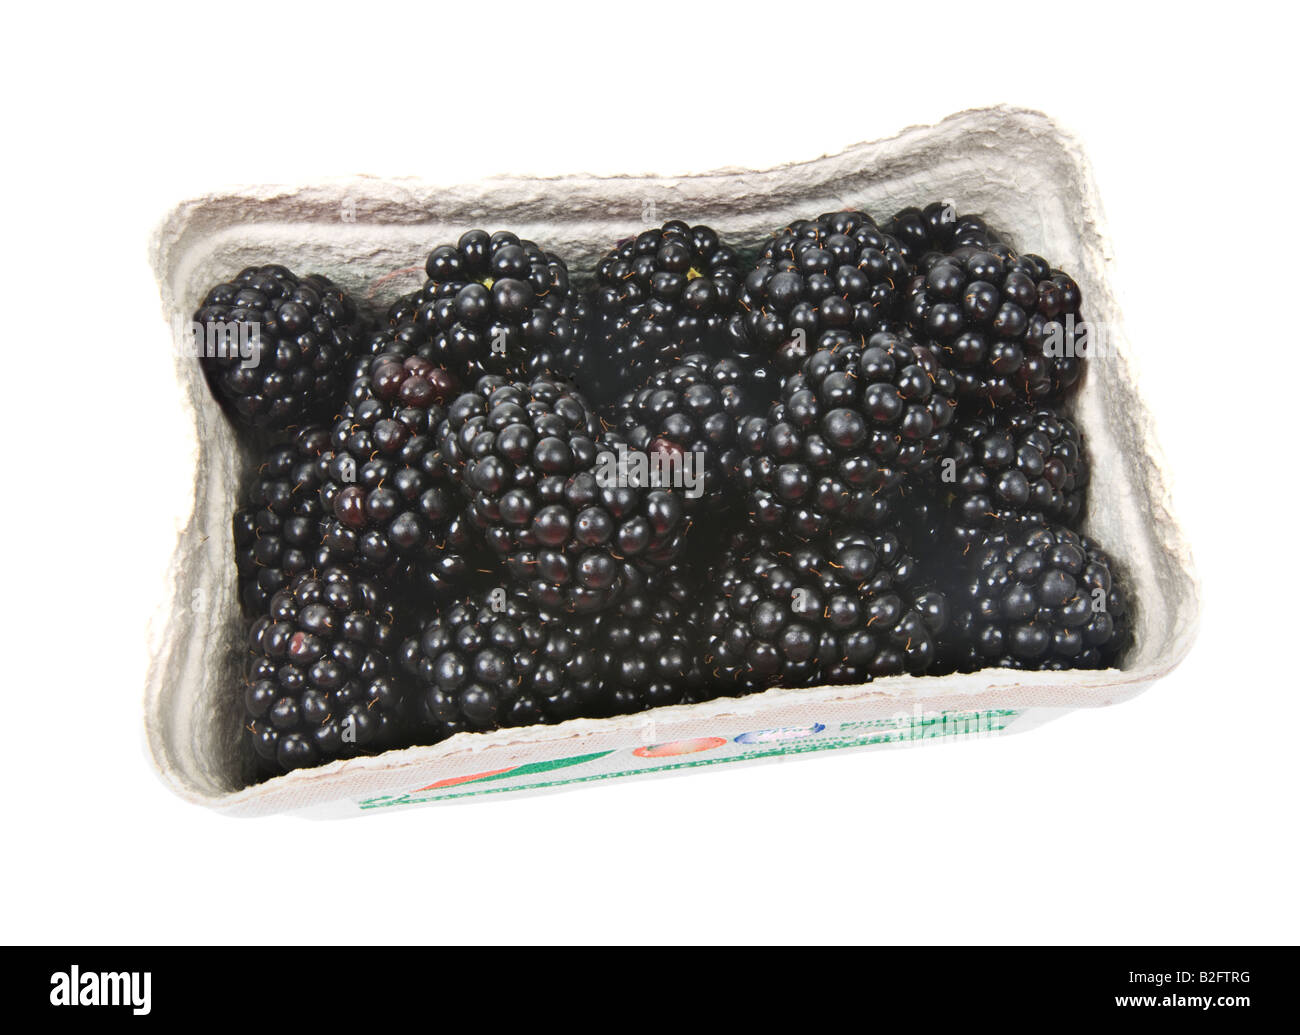 Rubas fruit Brombeere blackberry dewberry black berries boysenberry marionberry punnet panicle sell selling box fresh sheet on w Stock Photo